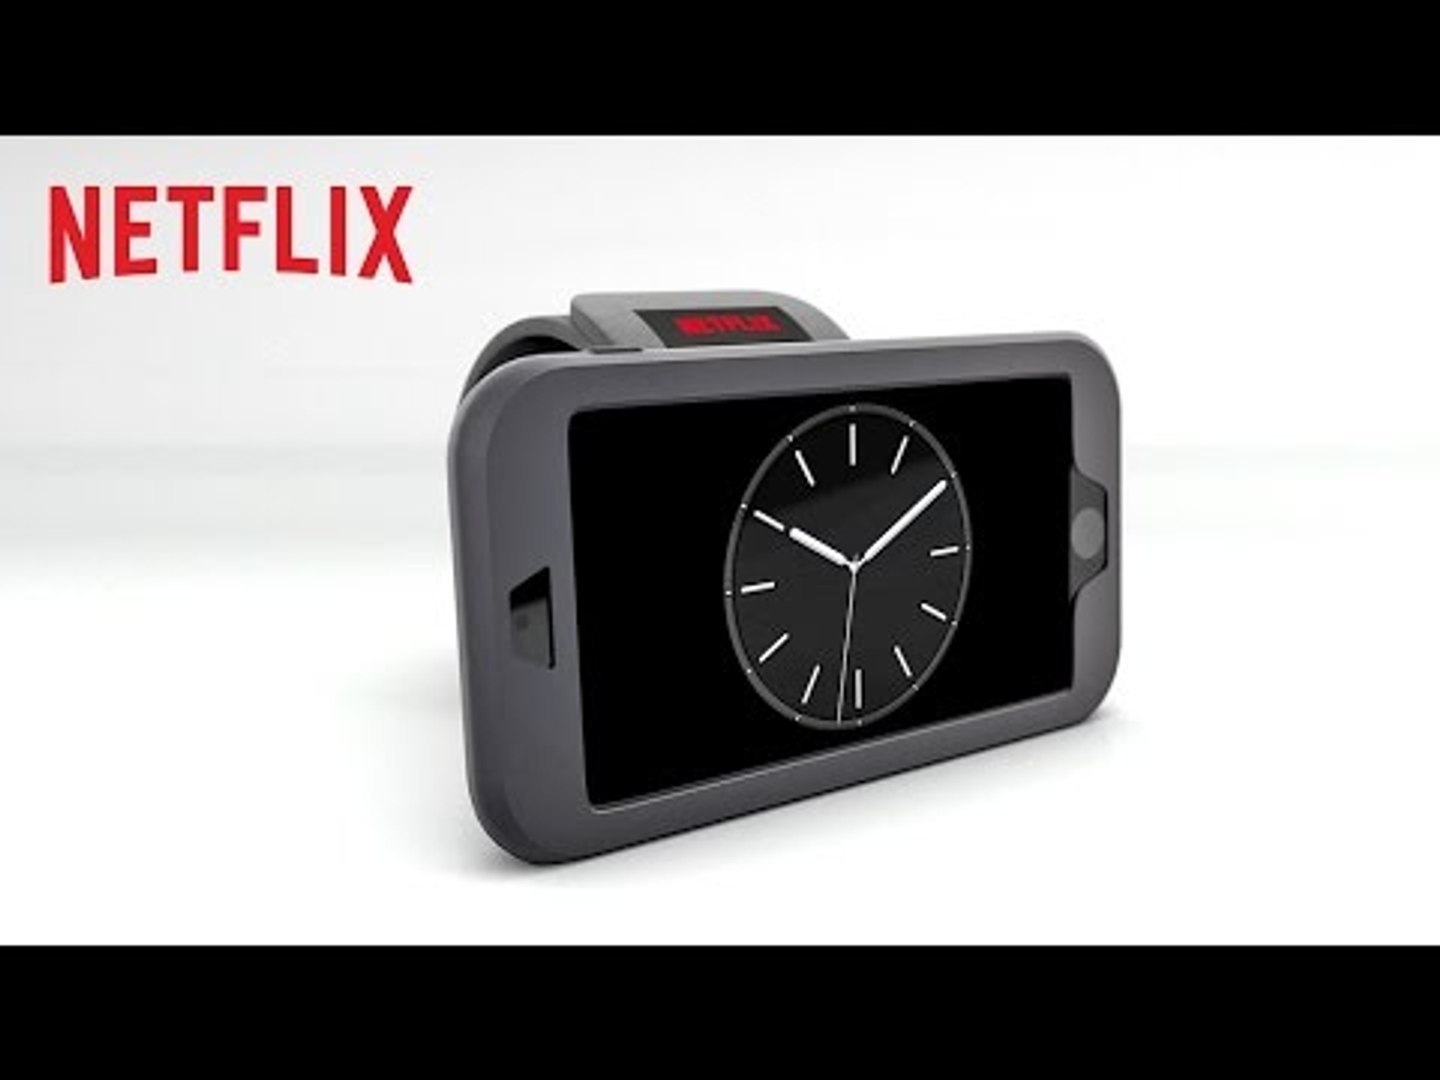 The Netflix Watch | Experience Total Freedom | Netflix